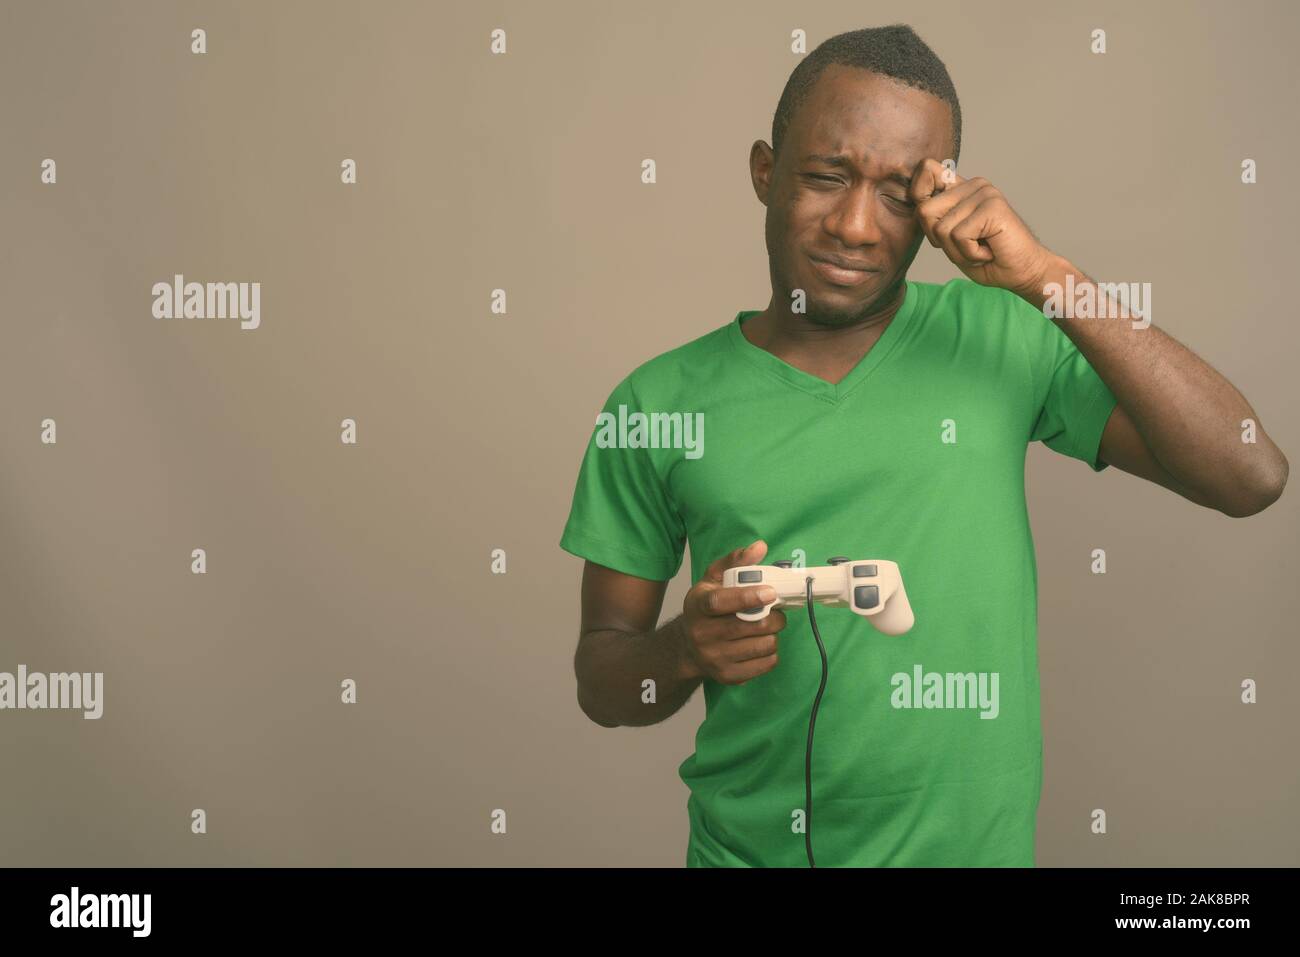 Young African man wearing green shirt contre l'arrière-plan gris Banque D'Images